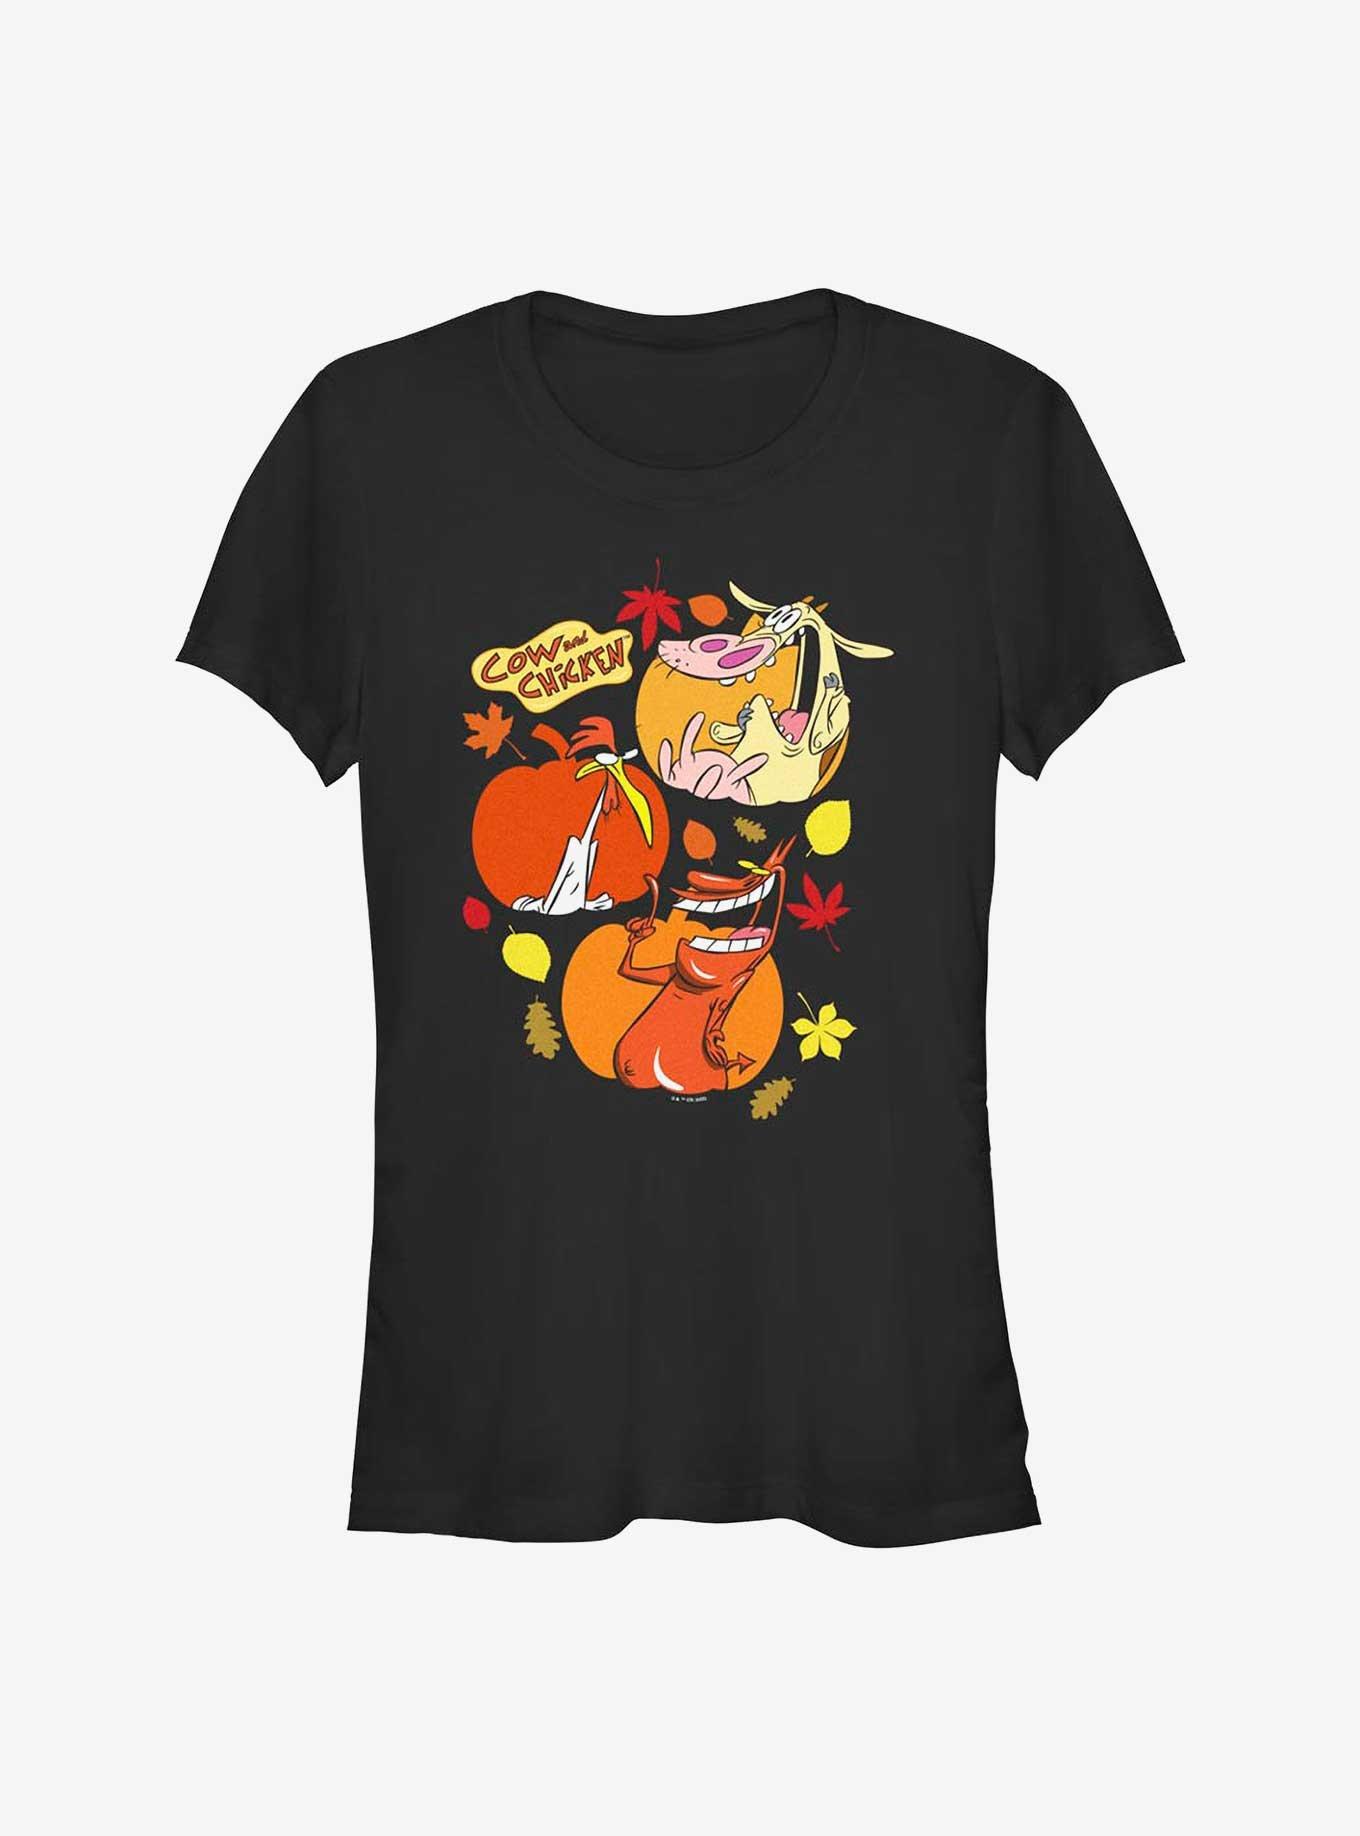 Cartoon Network Cow and Chicken Thankful Pumpkins Girls T-Shirt, BLACK, hi-res